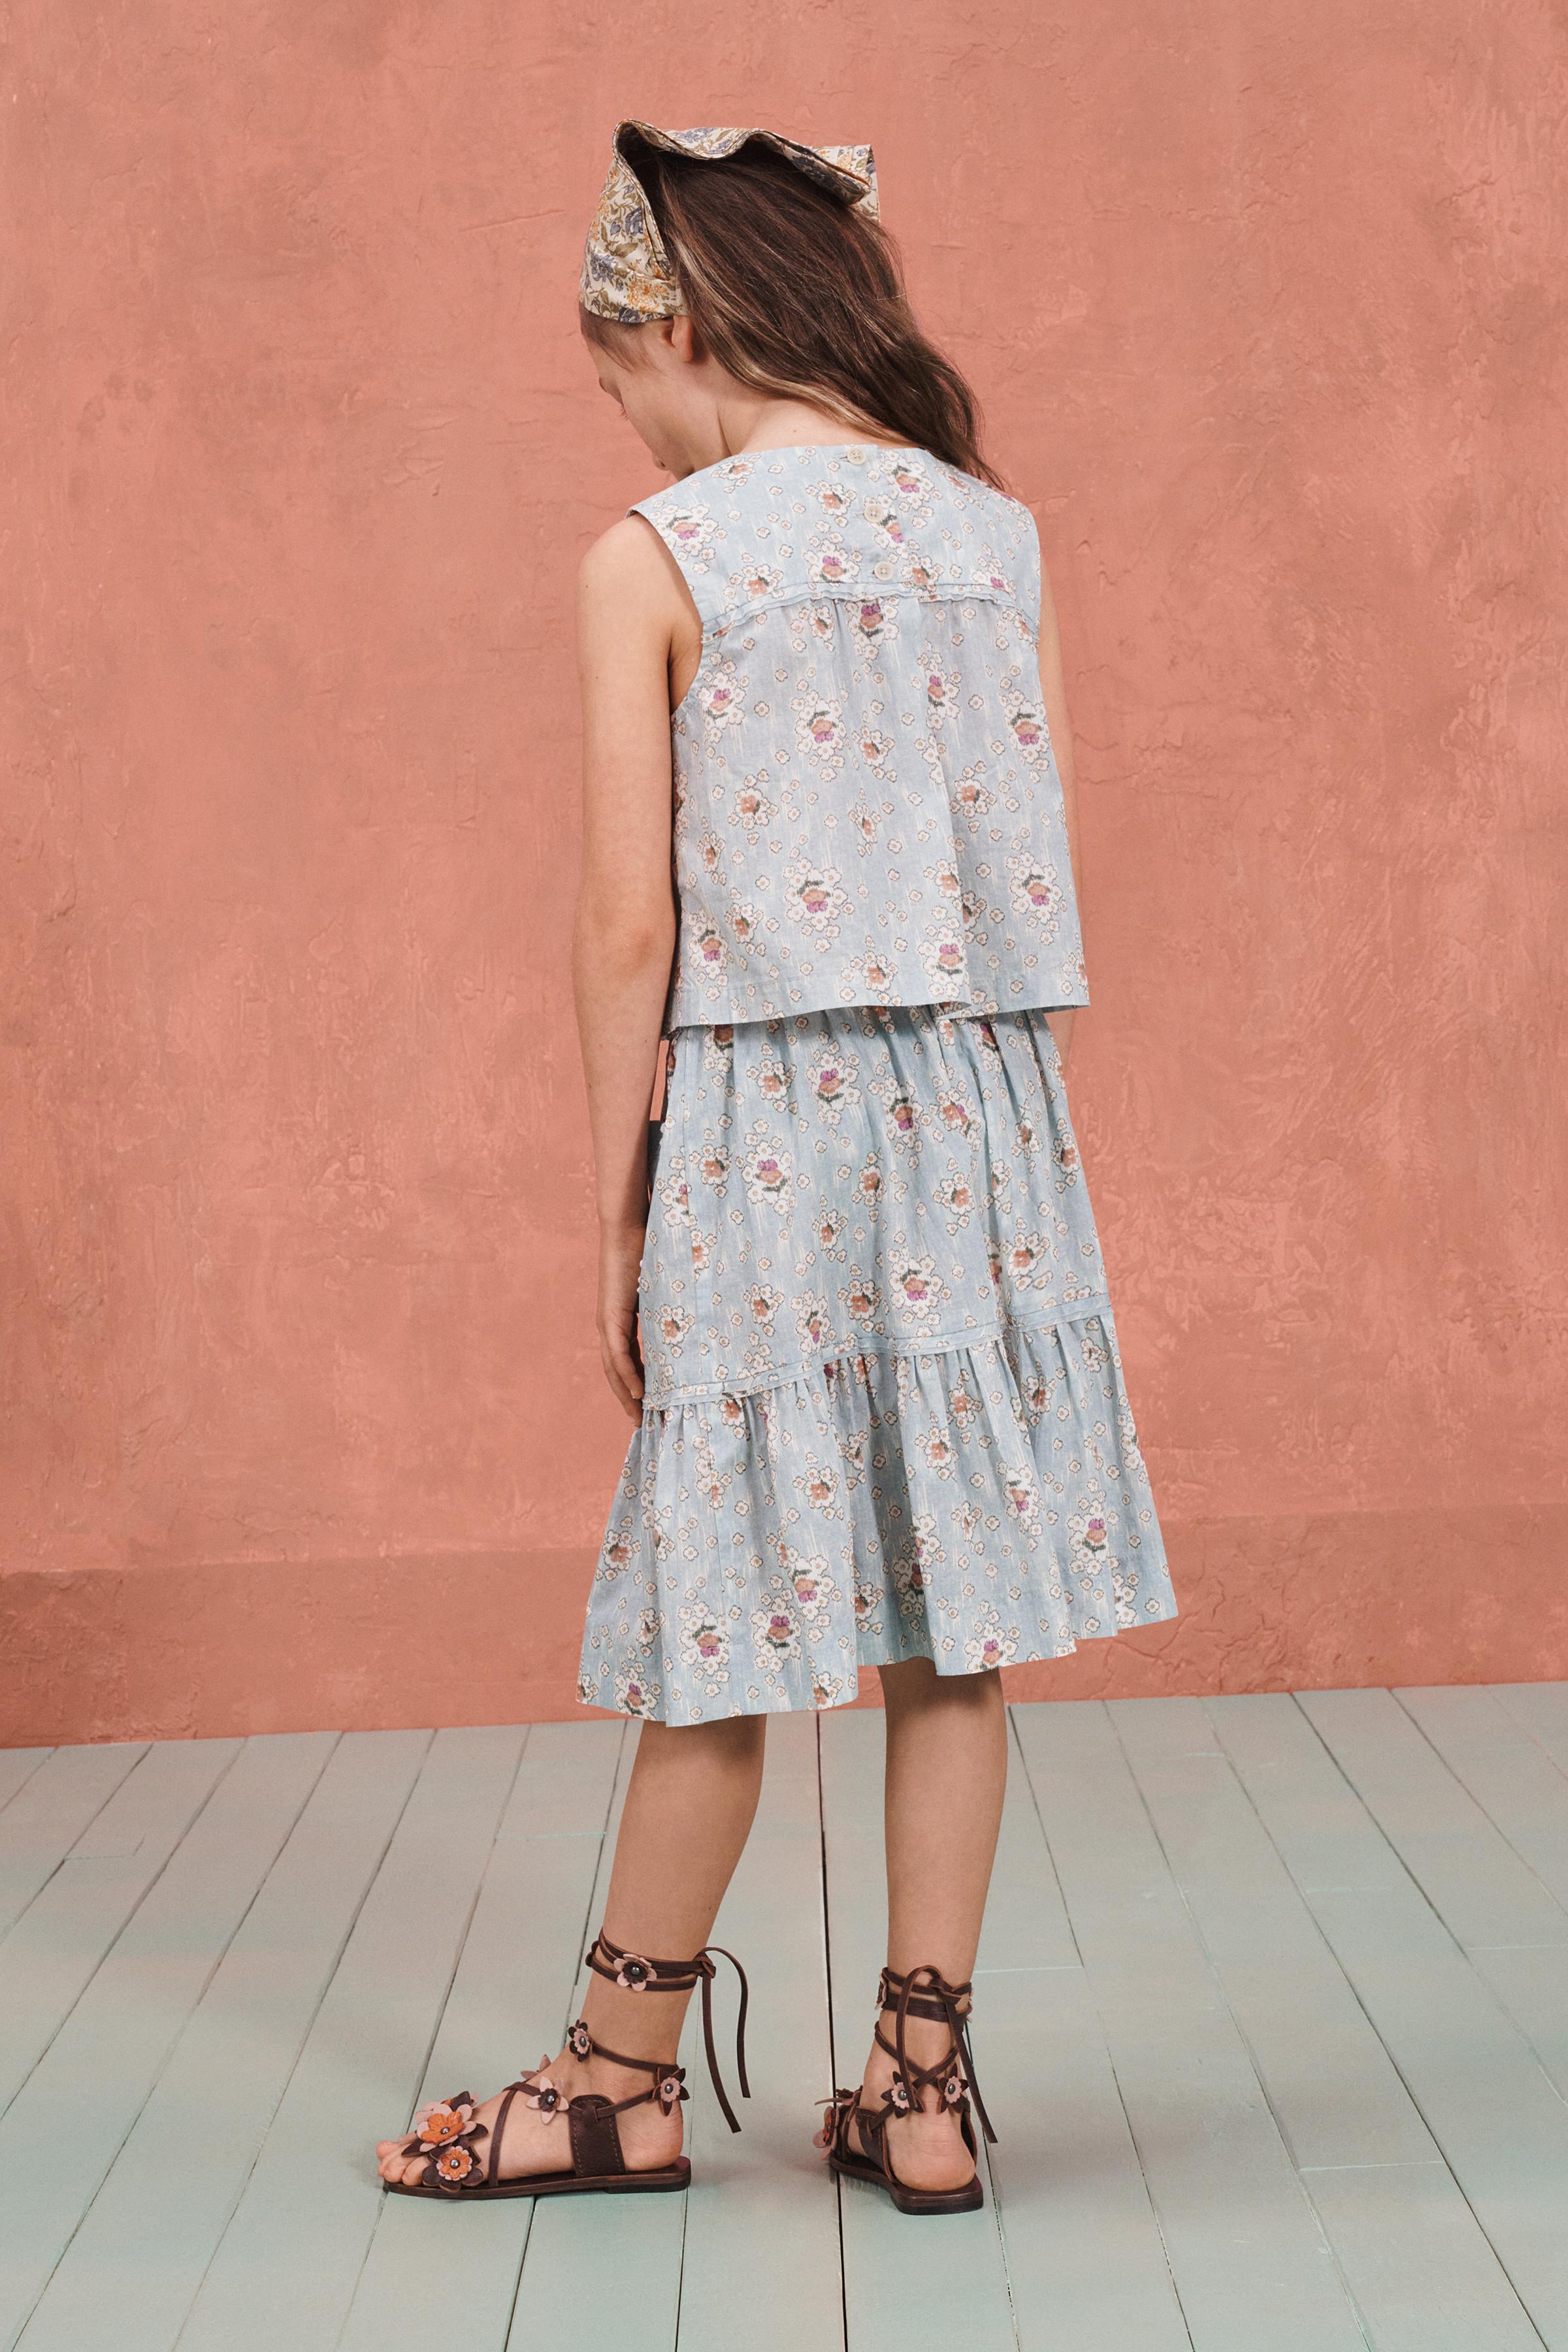 Terez Zara Childrens Girls Leggings Multi Colored Size Large 11-12 Sma -  Shop Linda's Stuff